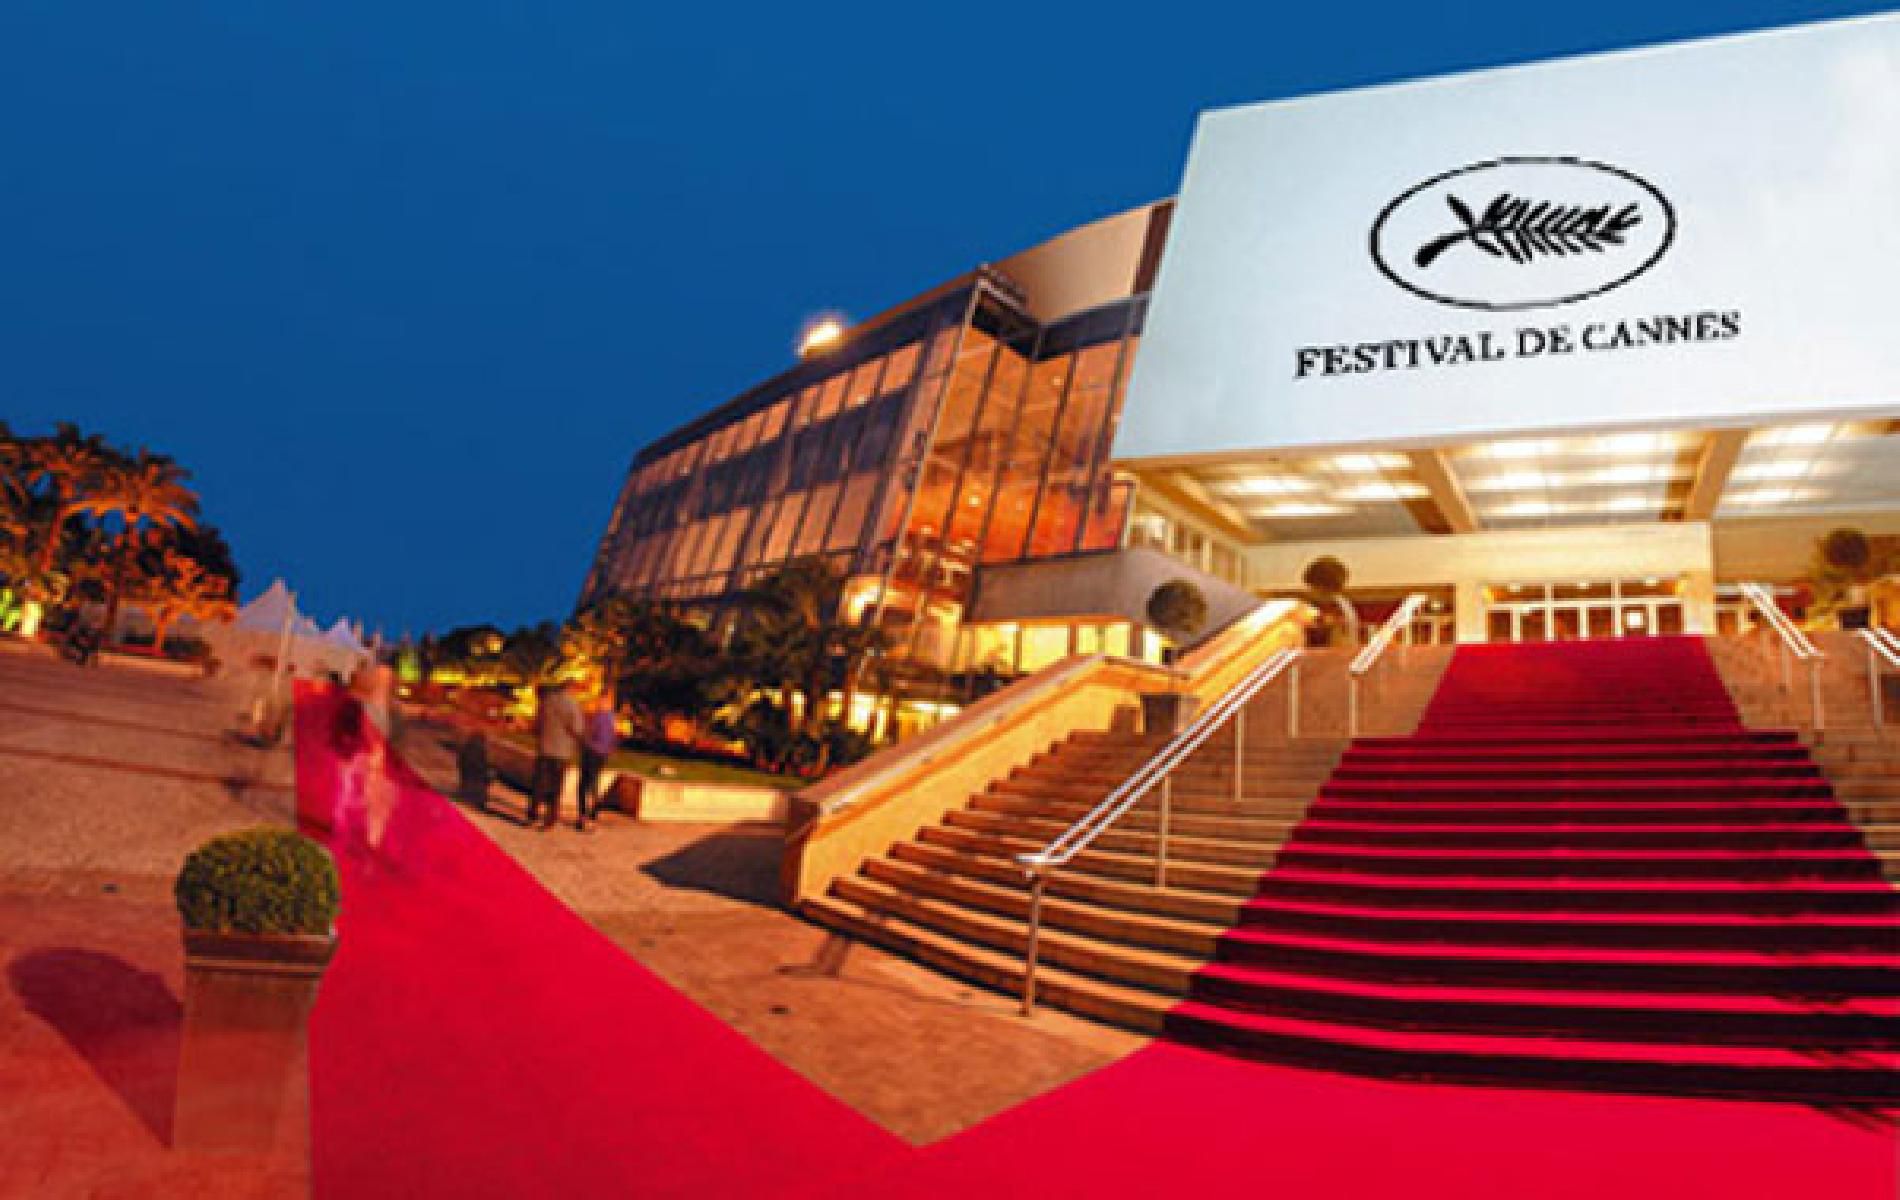 تاريخ و معلومات عن مهرجان كان السينمائي “Cannes”